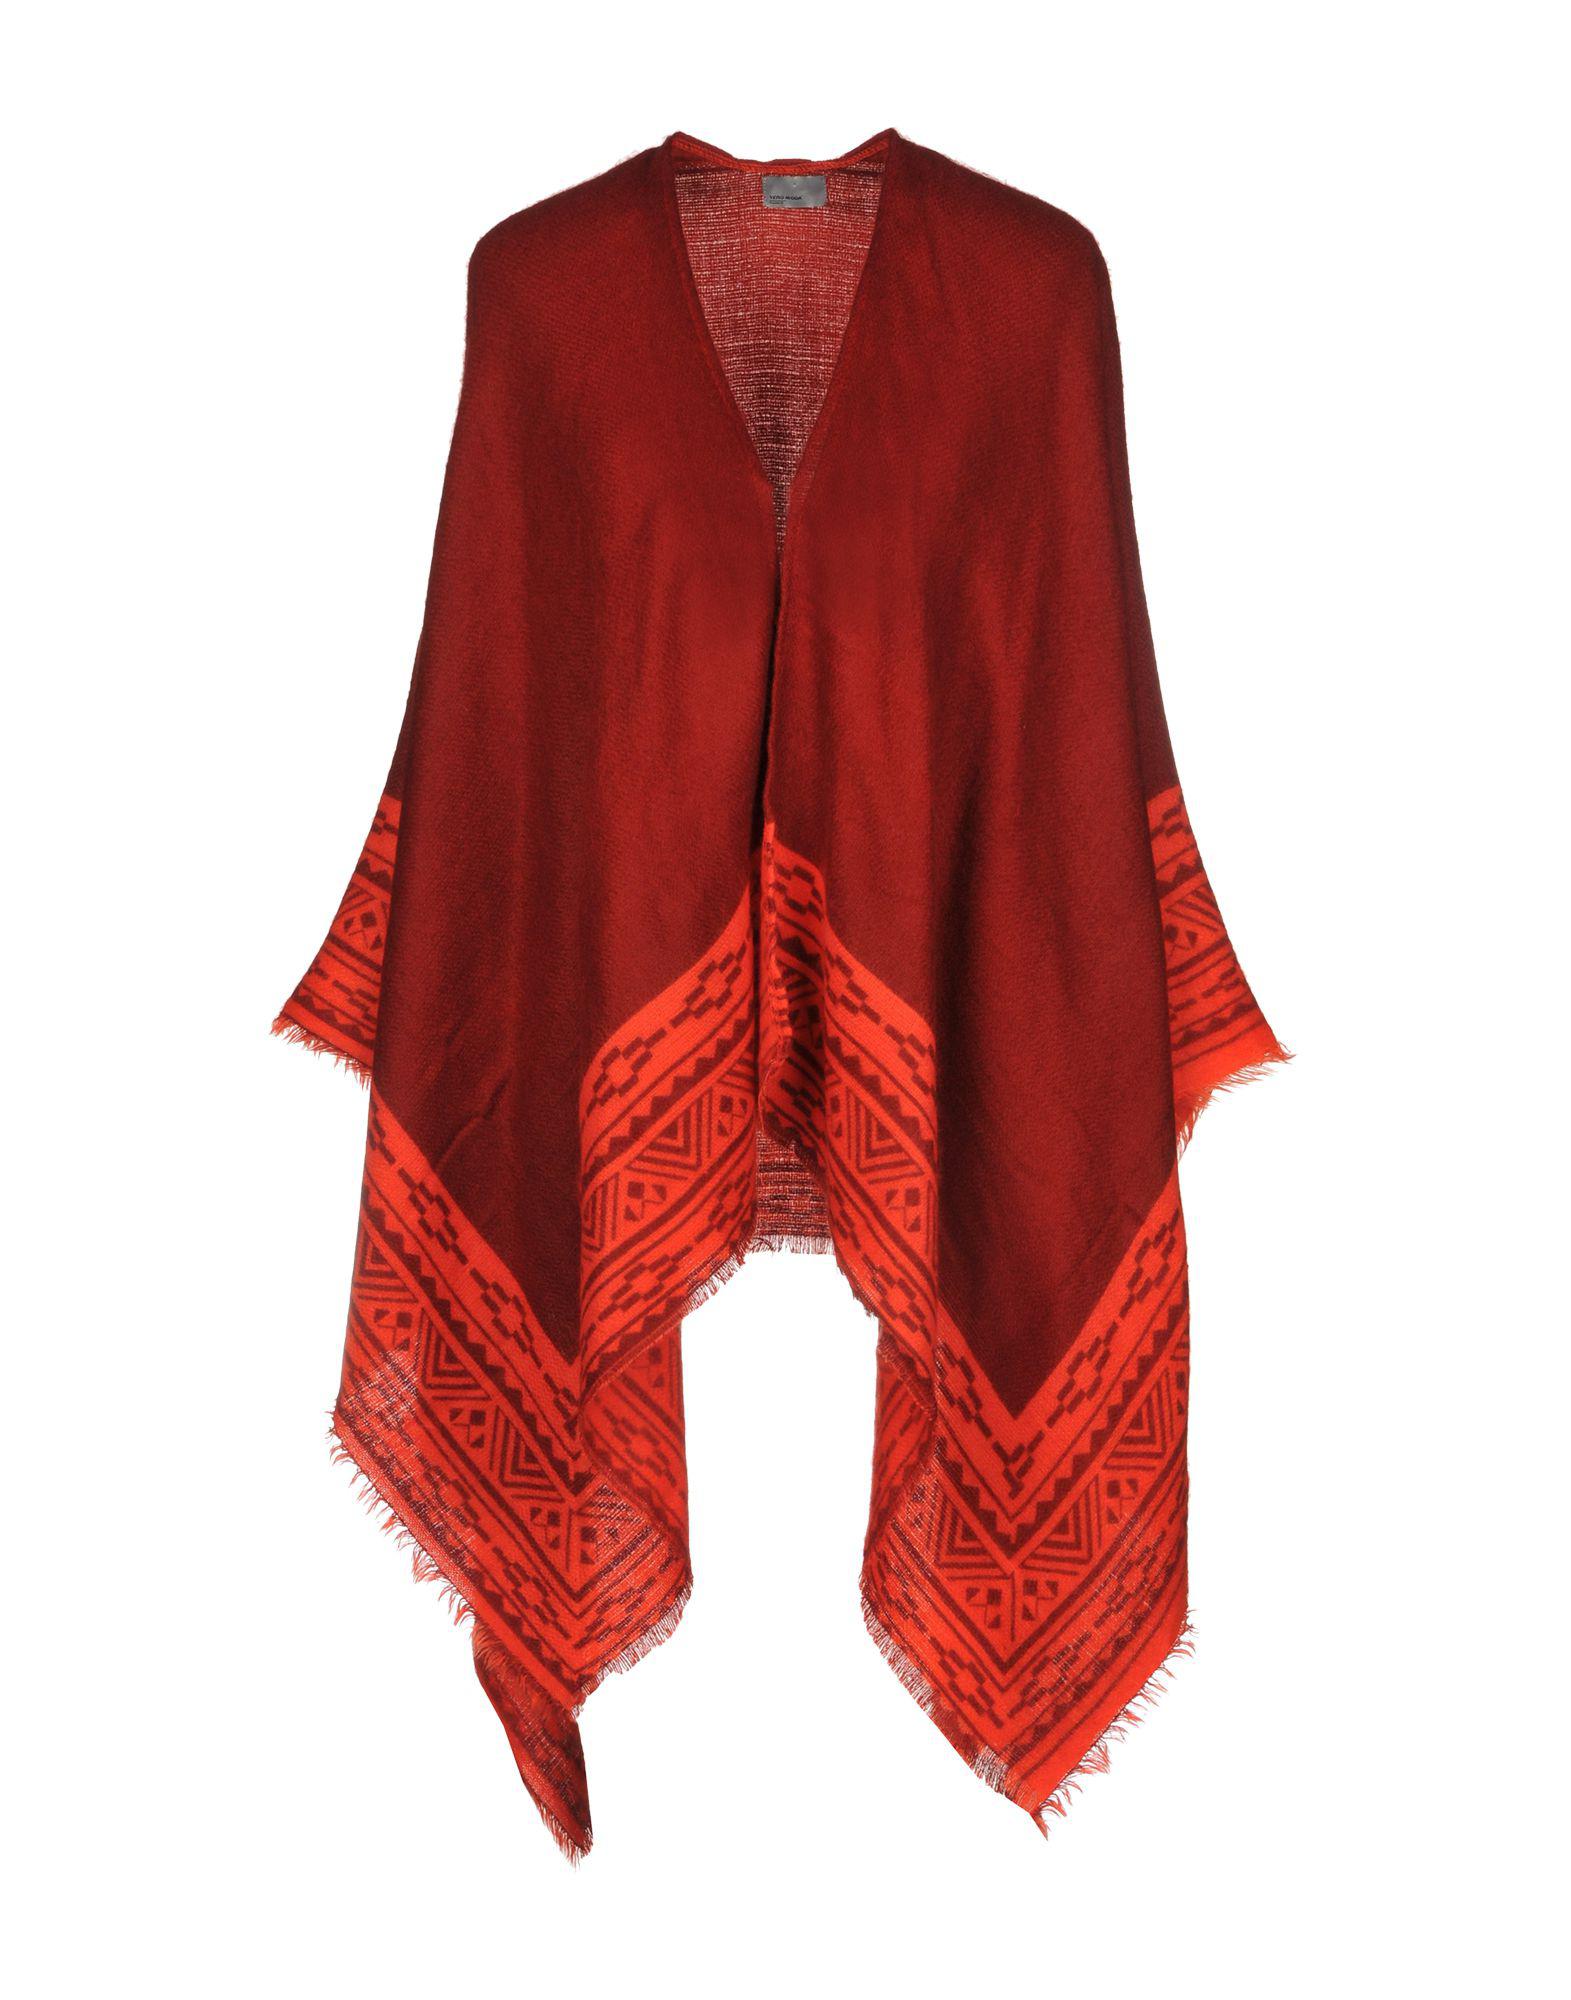 Vero Moda Flannel Capes & Ponchos in Rust (Red) - Lyst